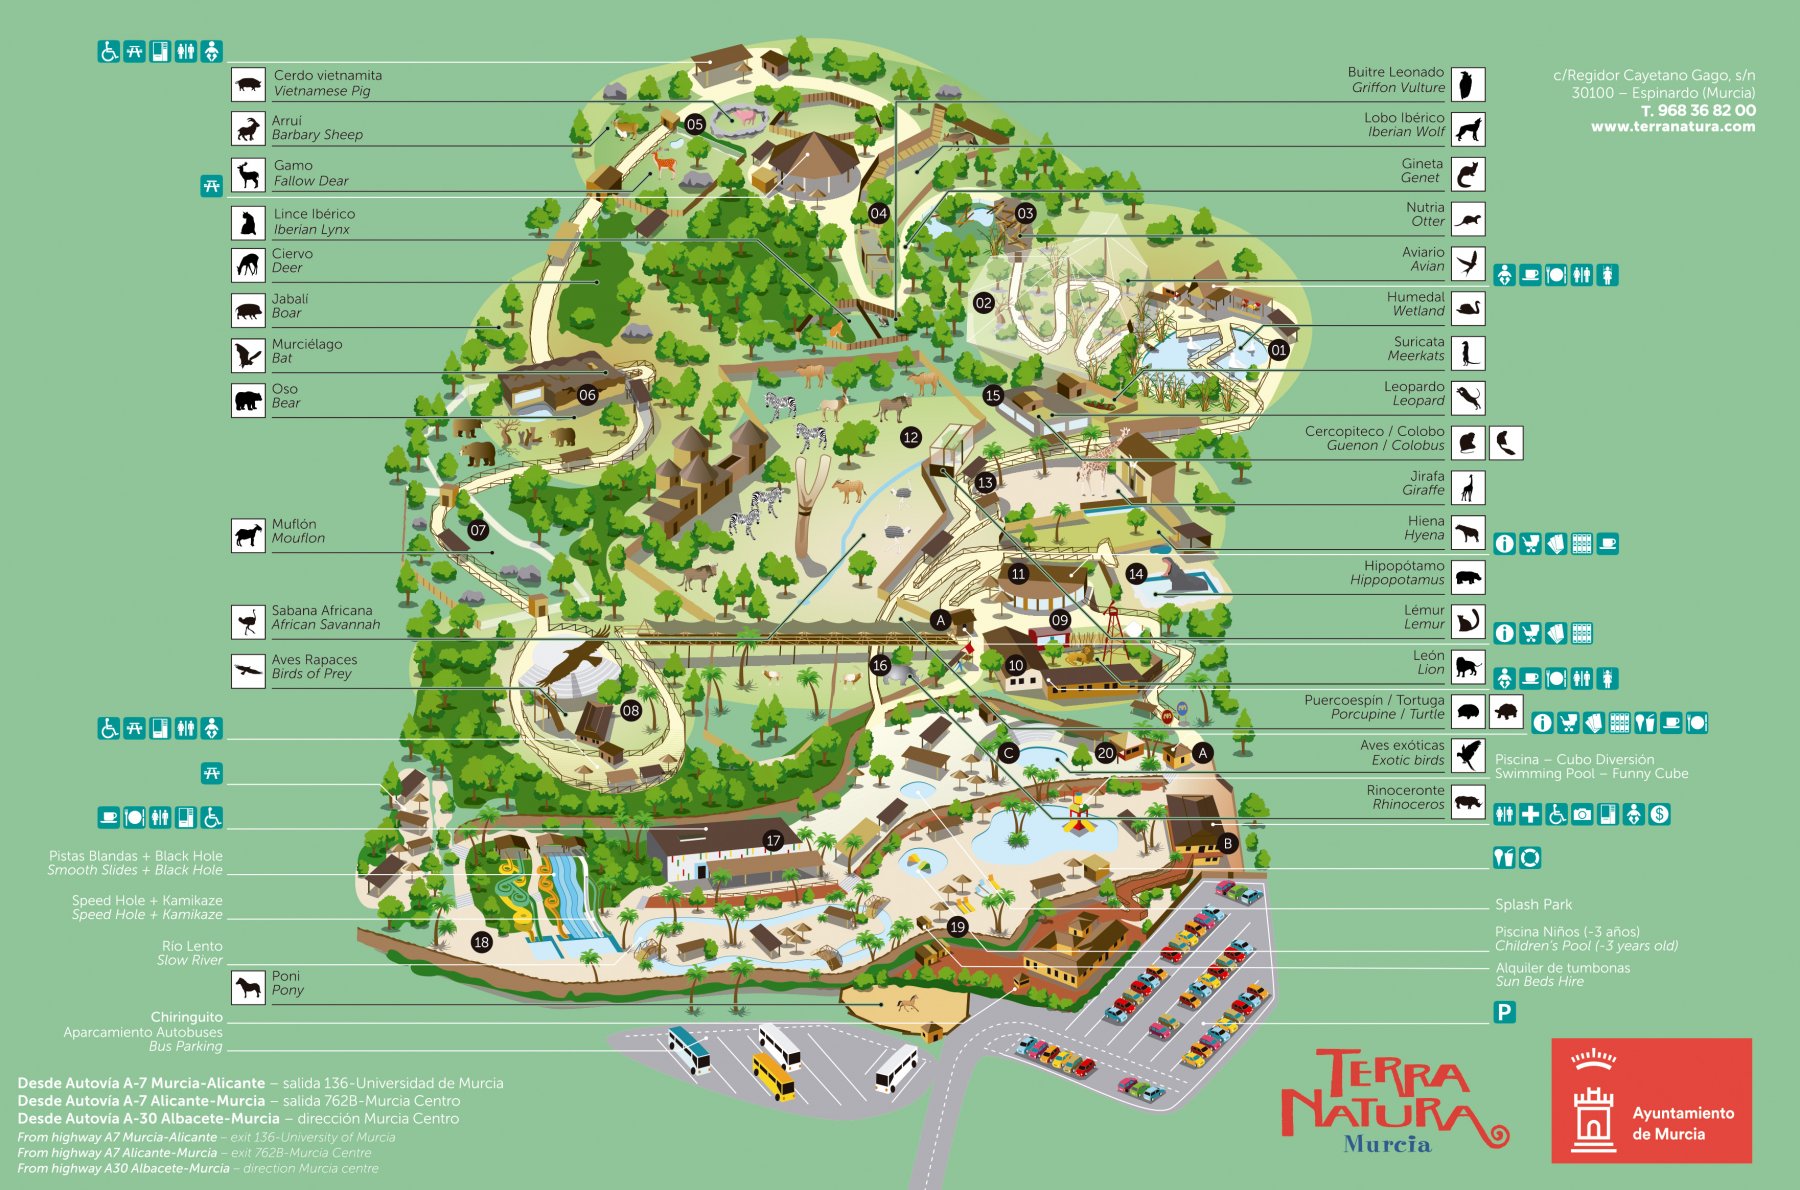 Map of the Park - Terra Natura Murcia